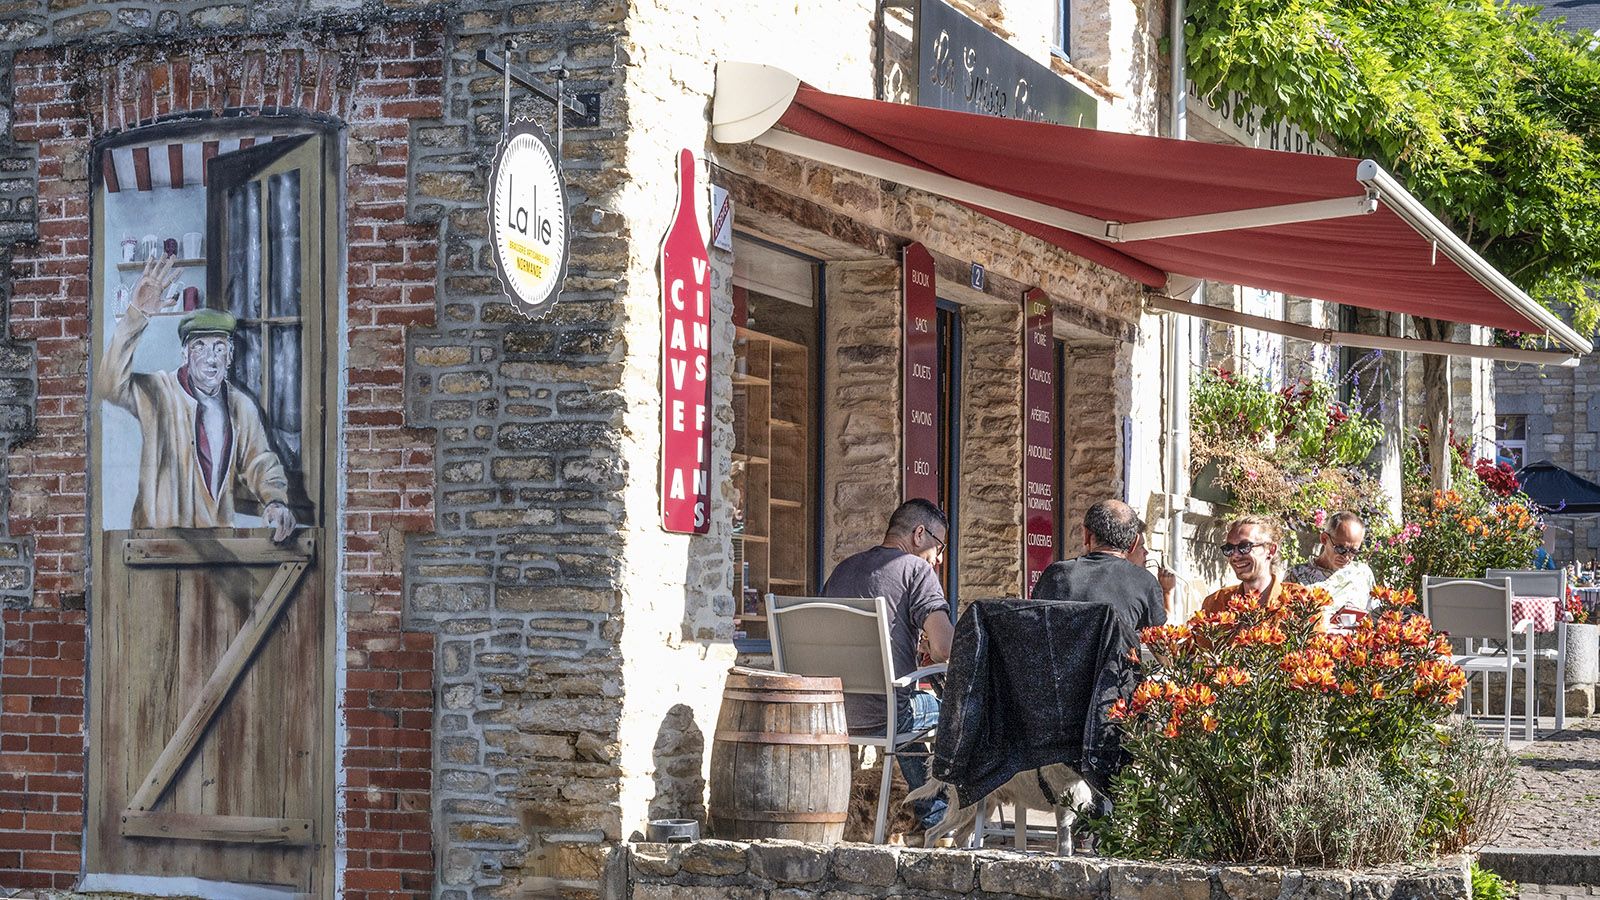 Ein épicerie mit Bar: La Suisse Gourmande in Clécy. Foto: Hilke Maunder